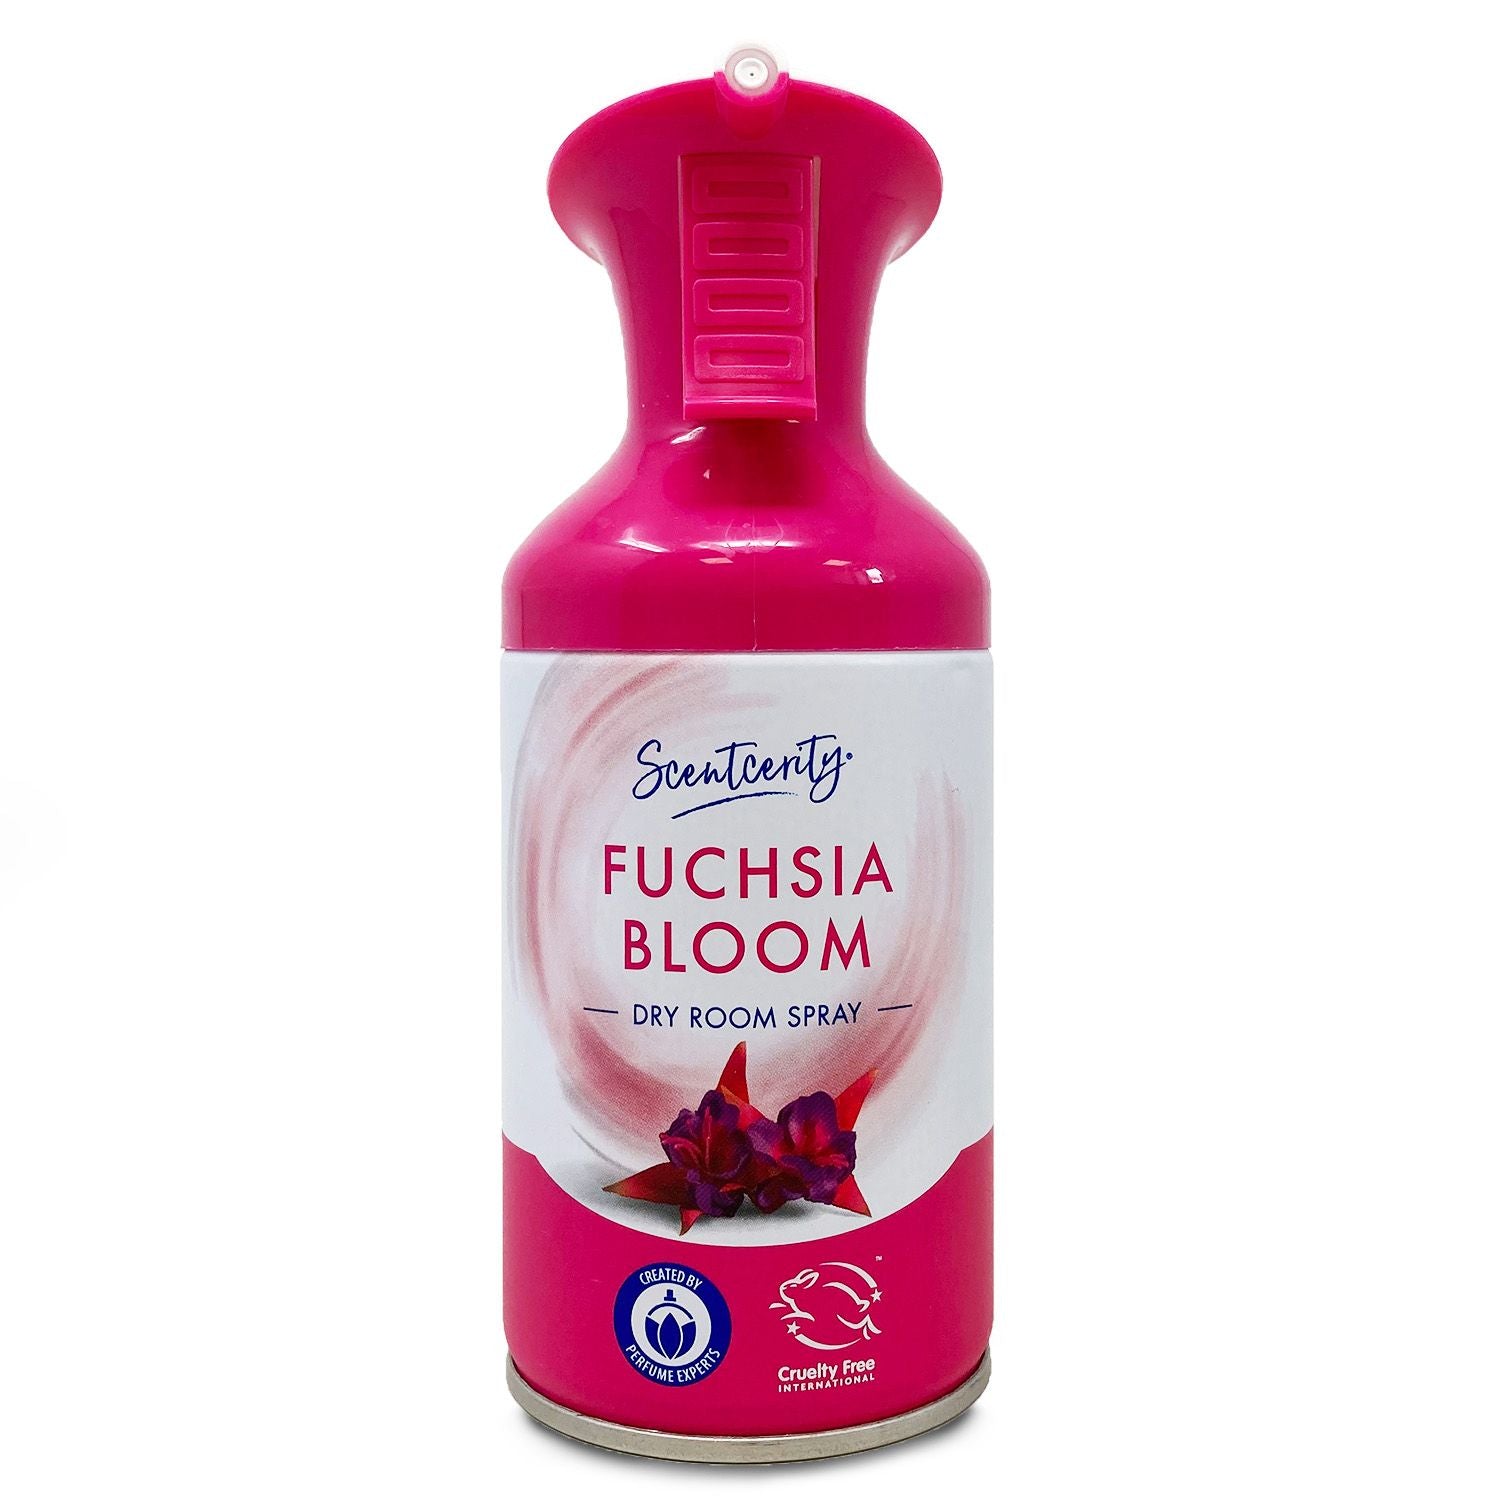 Scentcerity Fuchsia Bloom Dry Room Spray 250ml